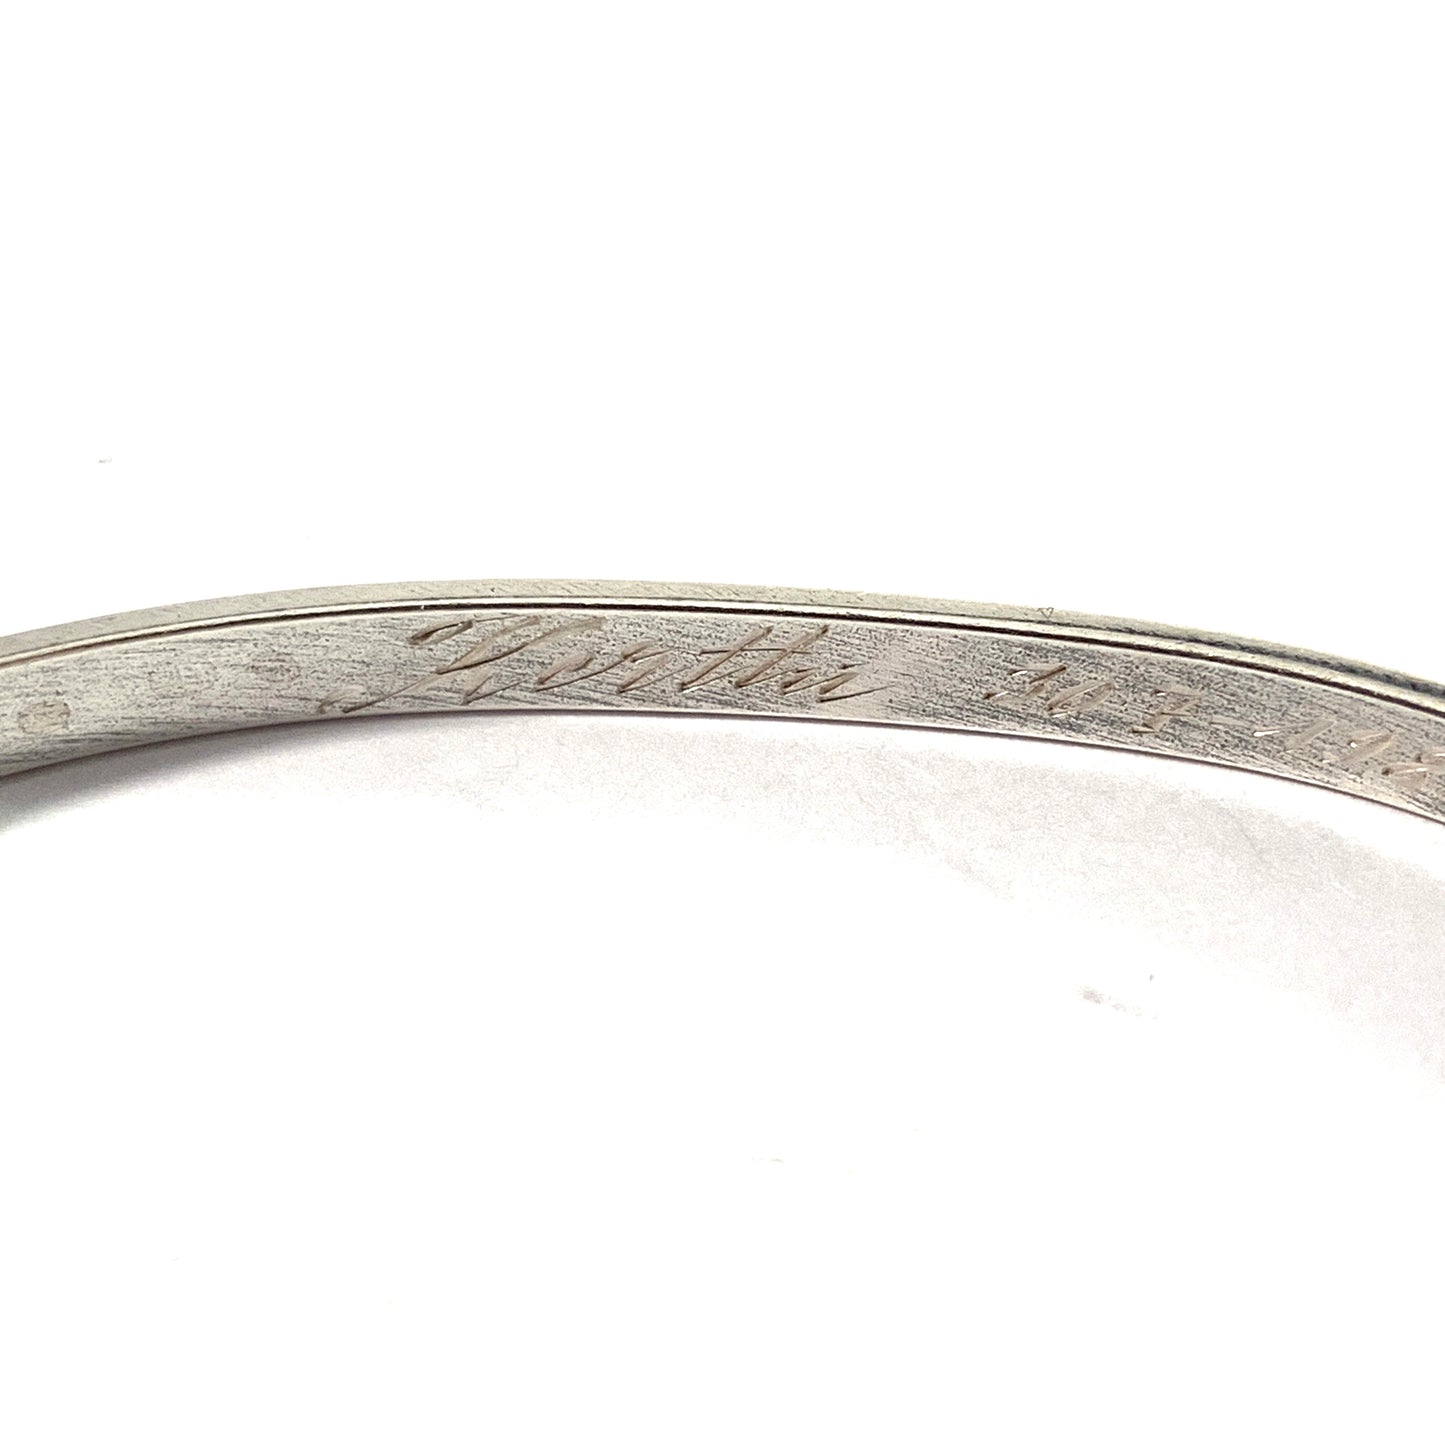 Kalevala Koru, Finland. Vintage Sterling Silver Open Charm Bangle Bracelet.